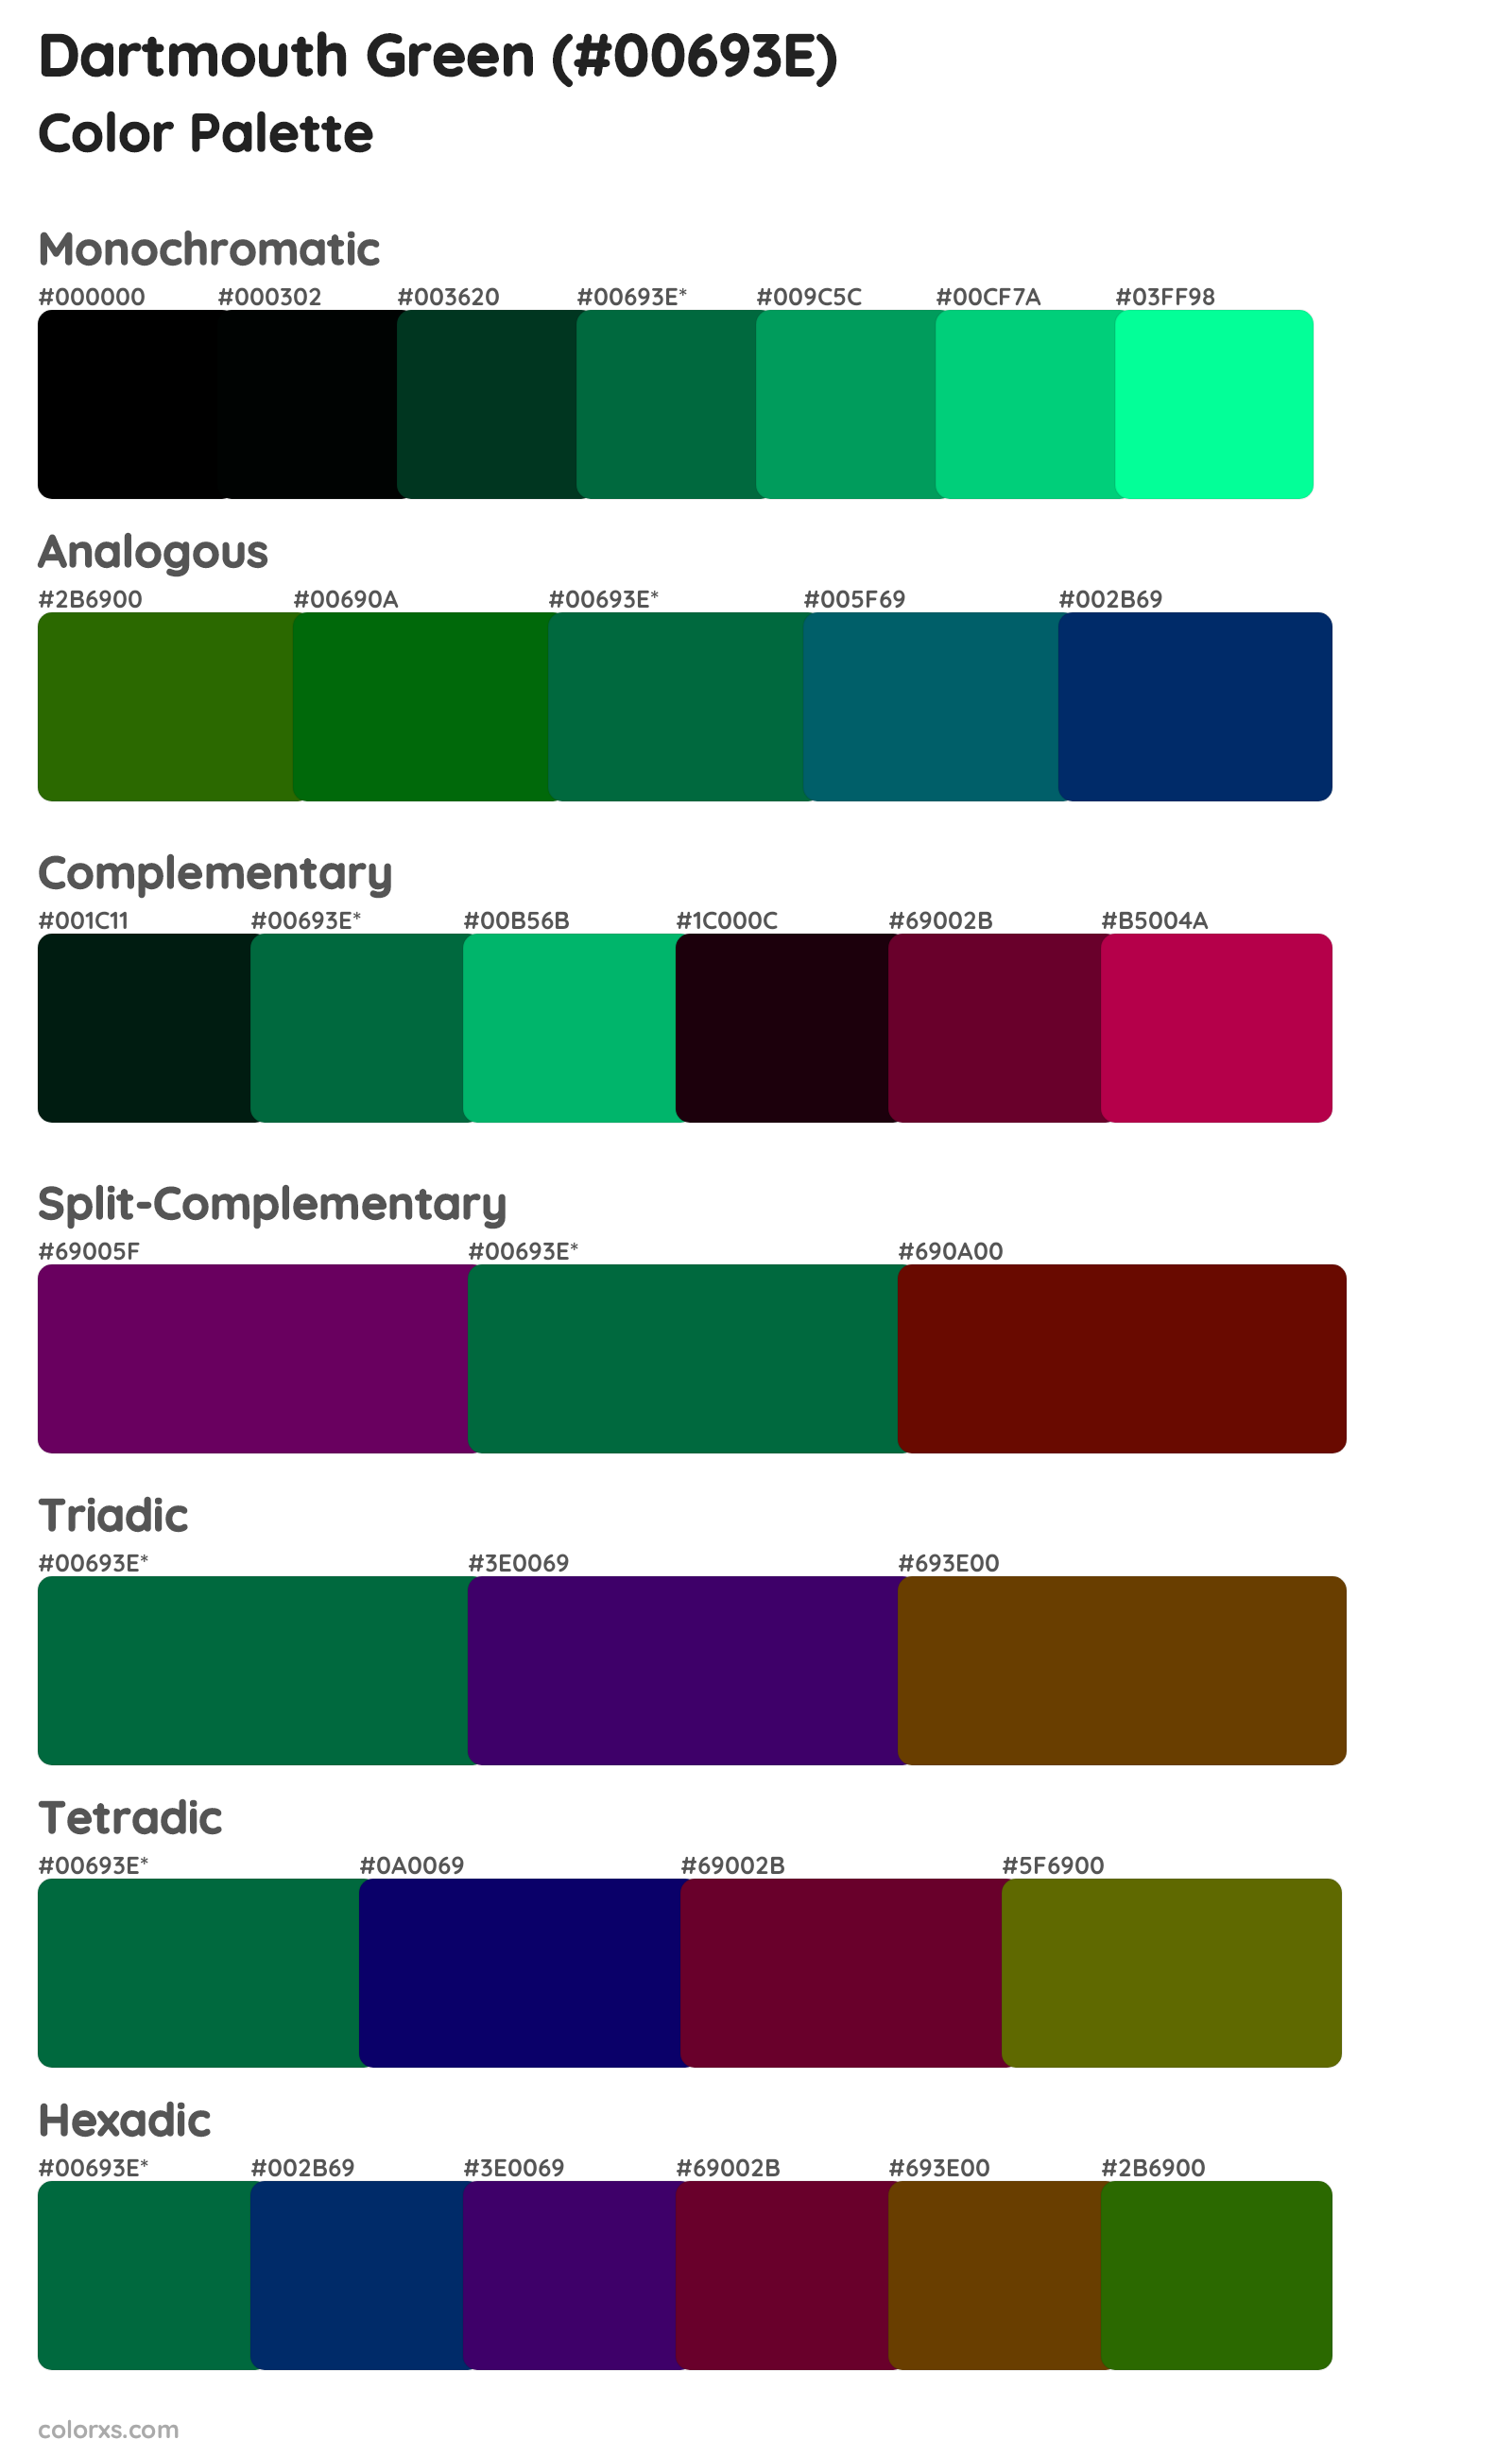 Dartmouth Green Color Scheme Palettes